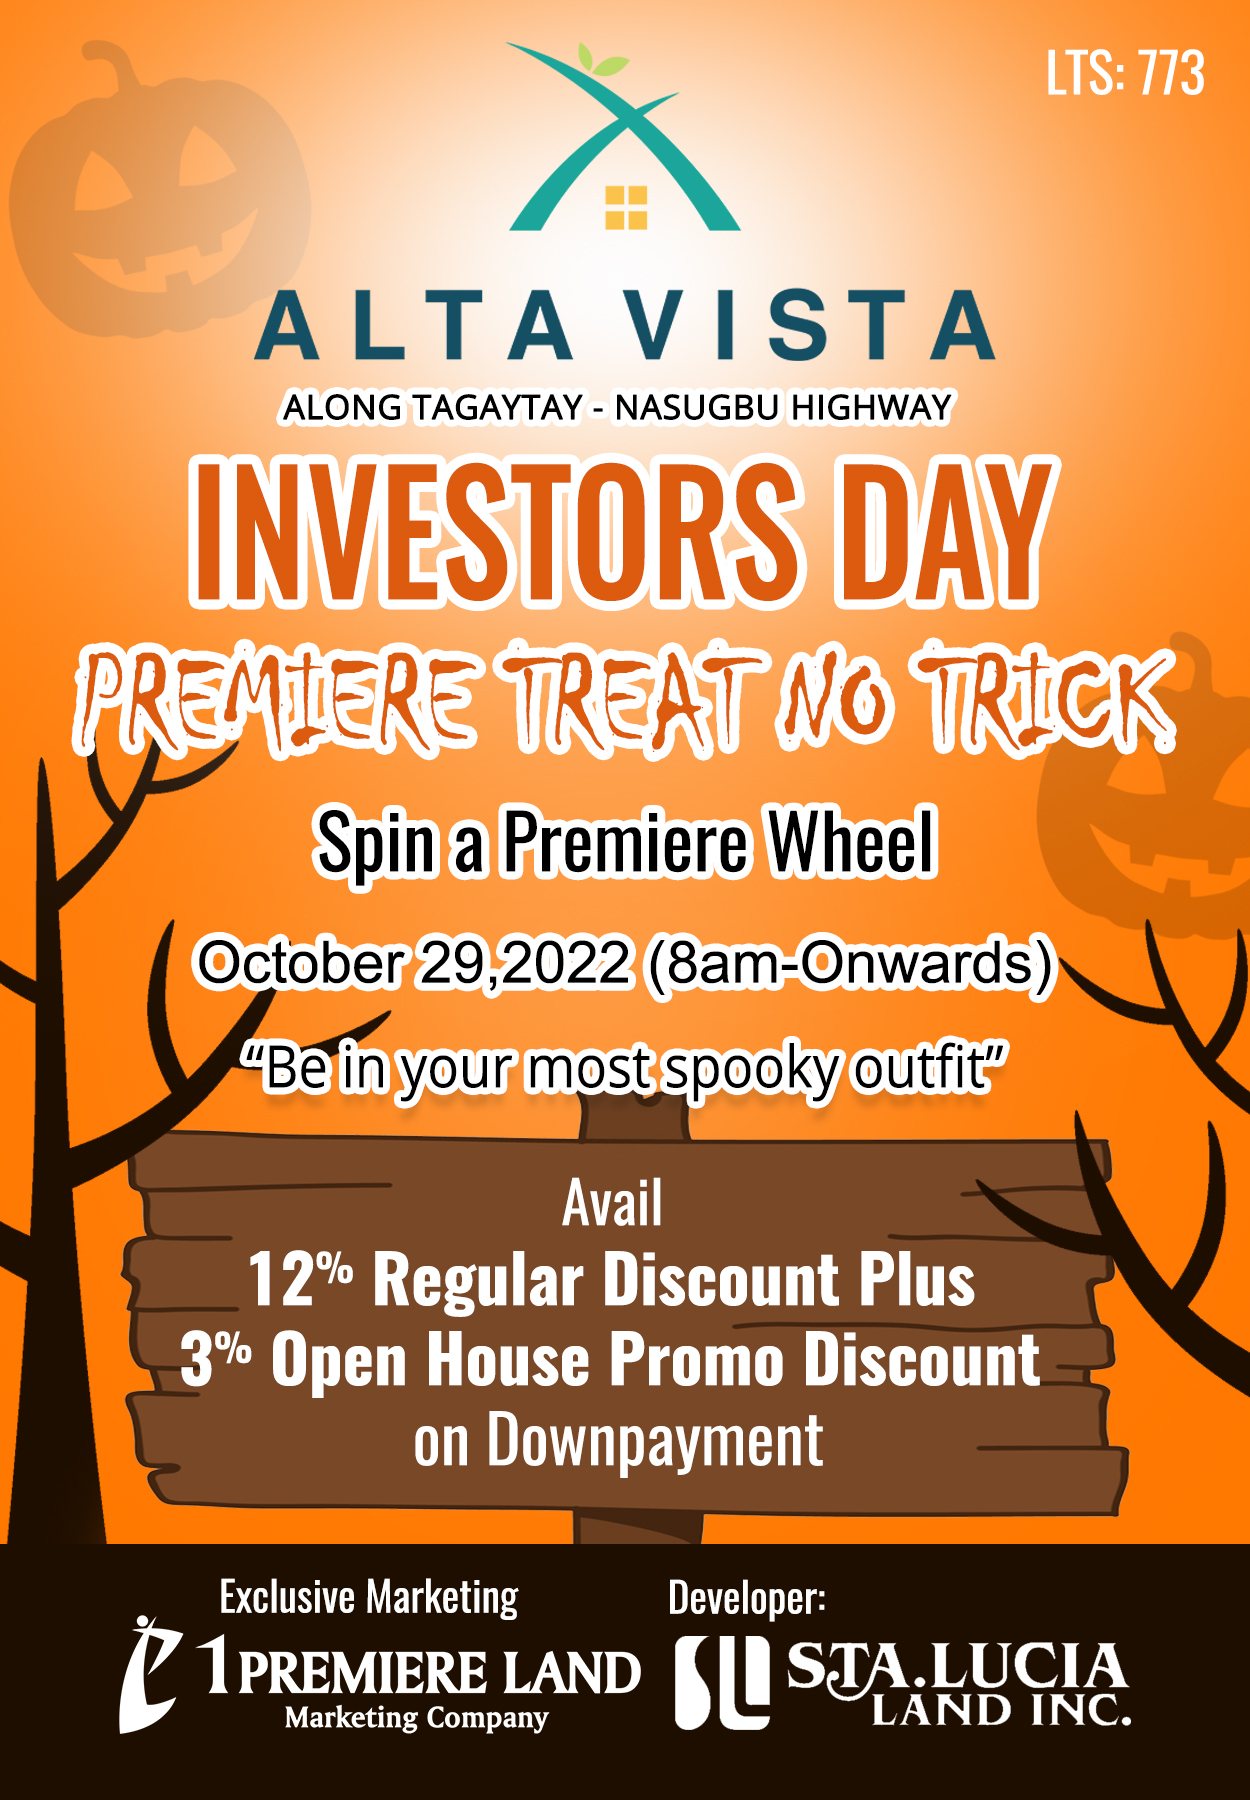 ALTAVISTA Investors Day